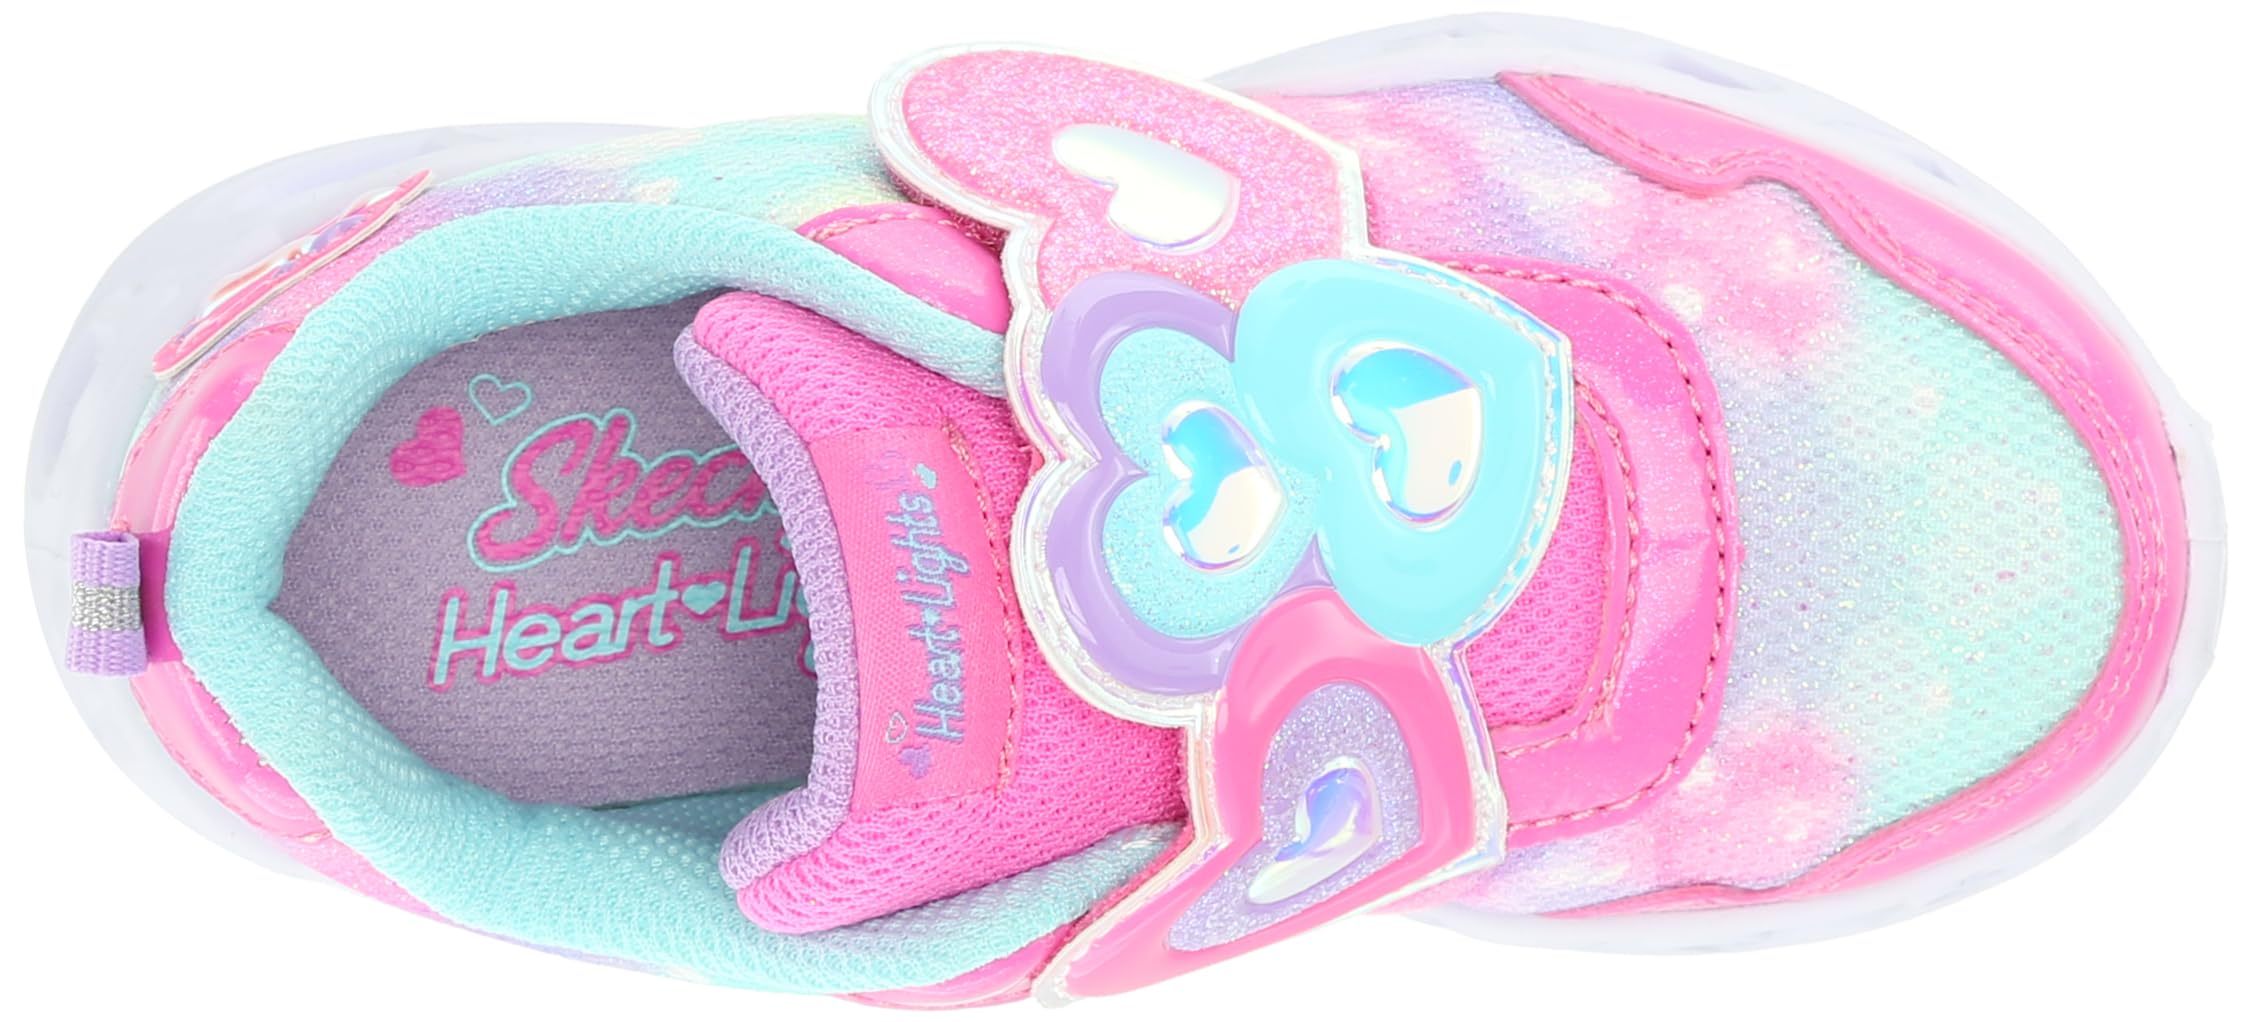 Skechers Kids Girls Heart Lights Sneaker, Pink/Turquoise, 10 Toddler